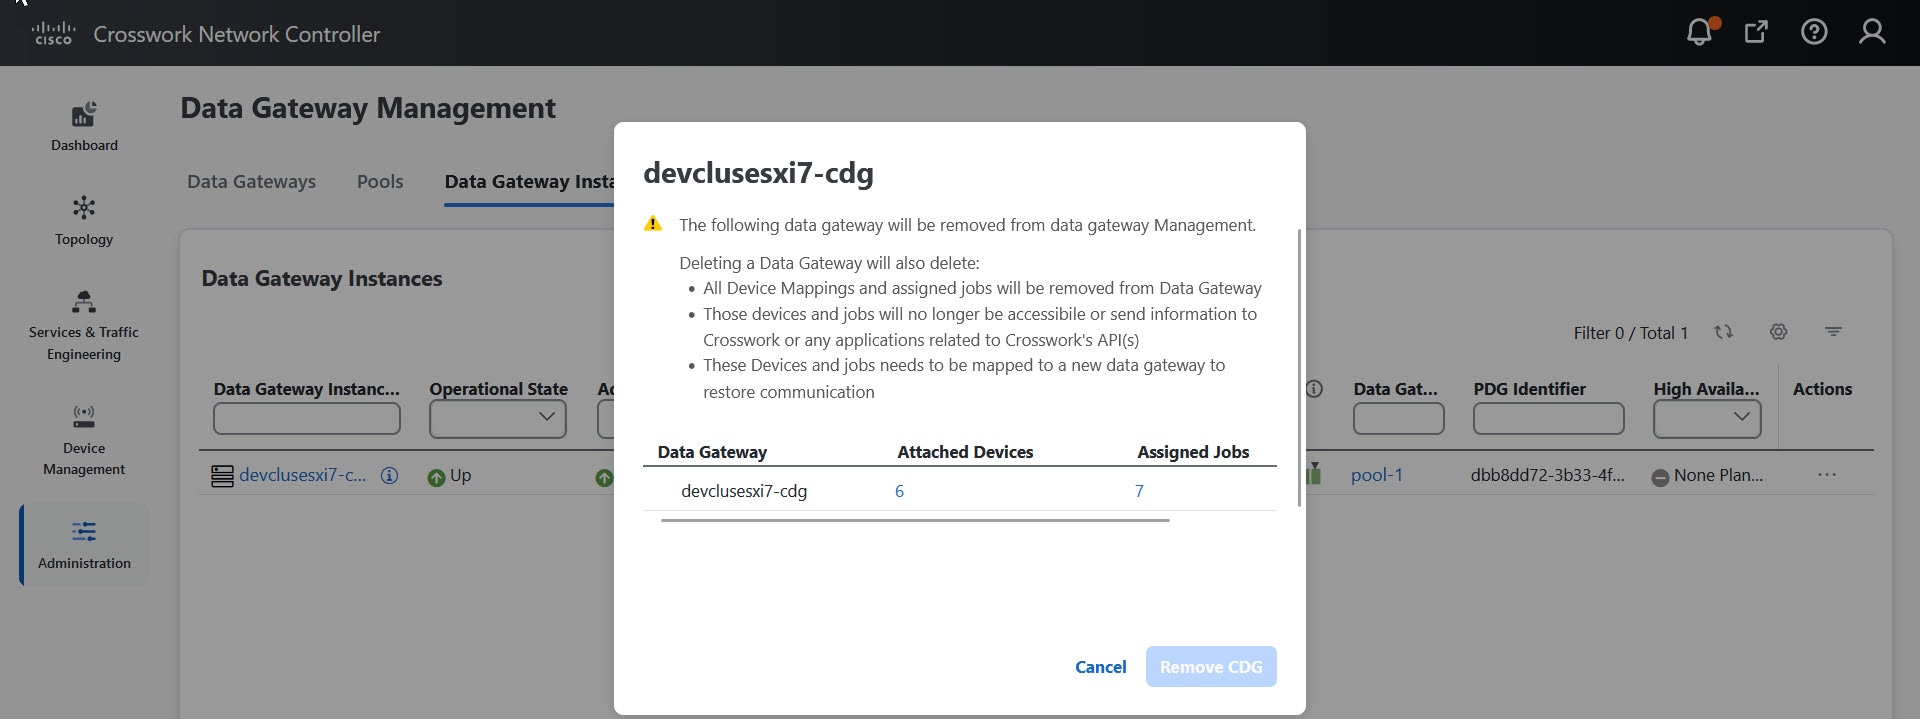 Delete Data Gateway Confirmation Dialog Box